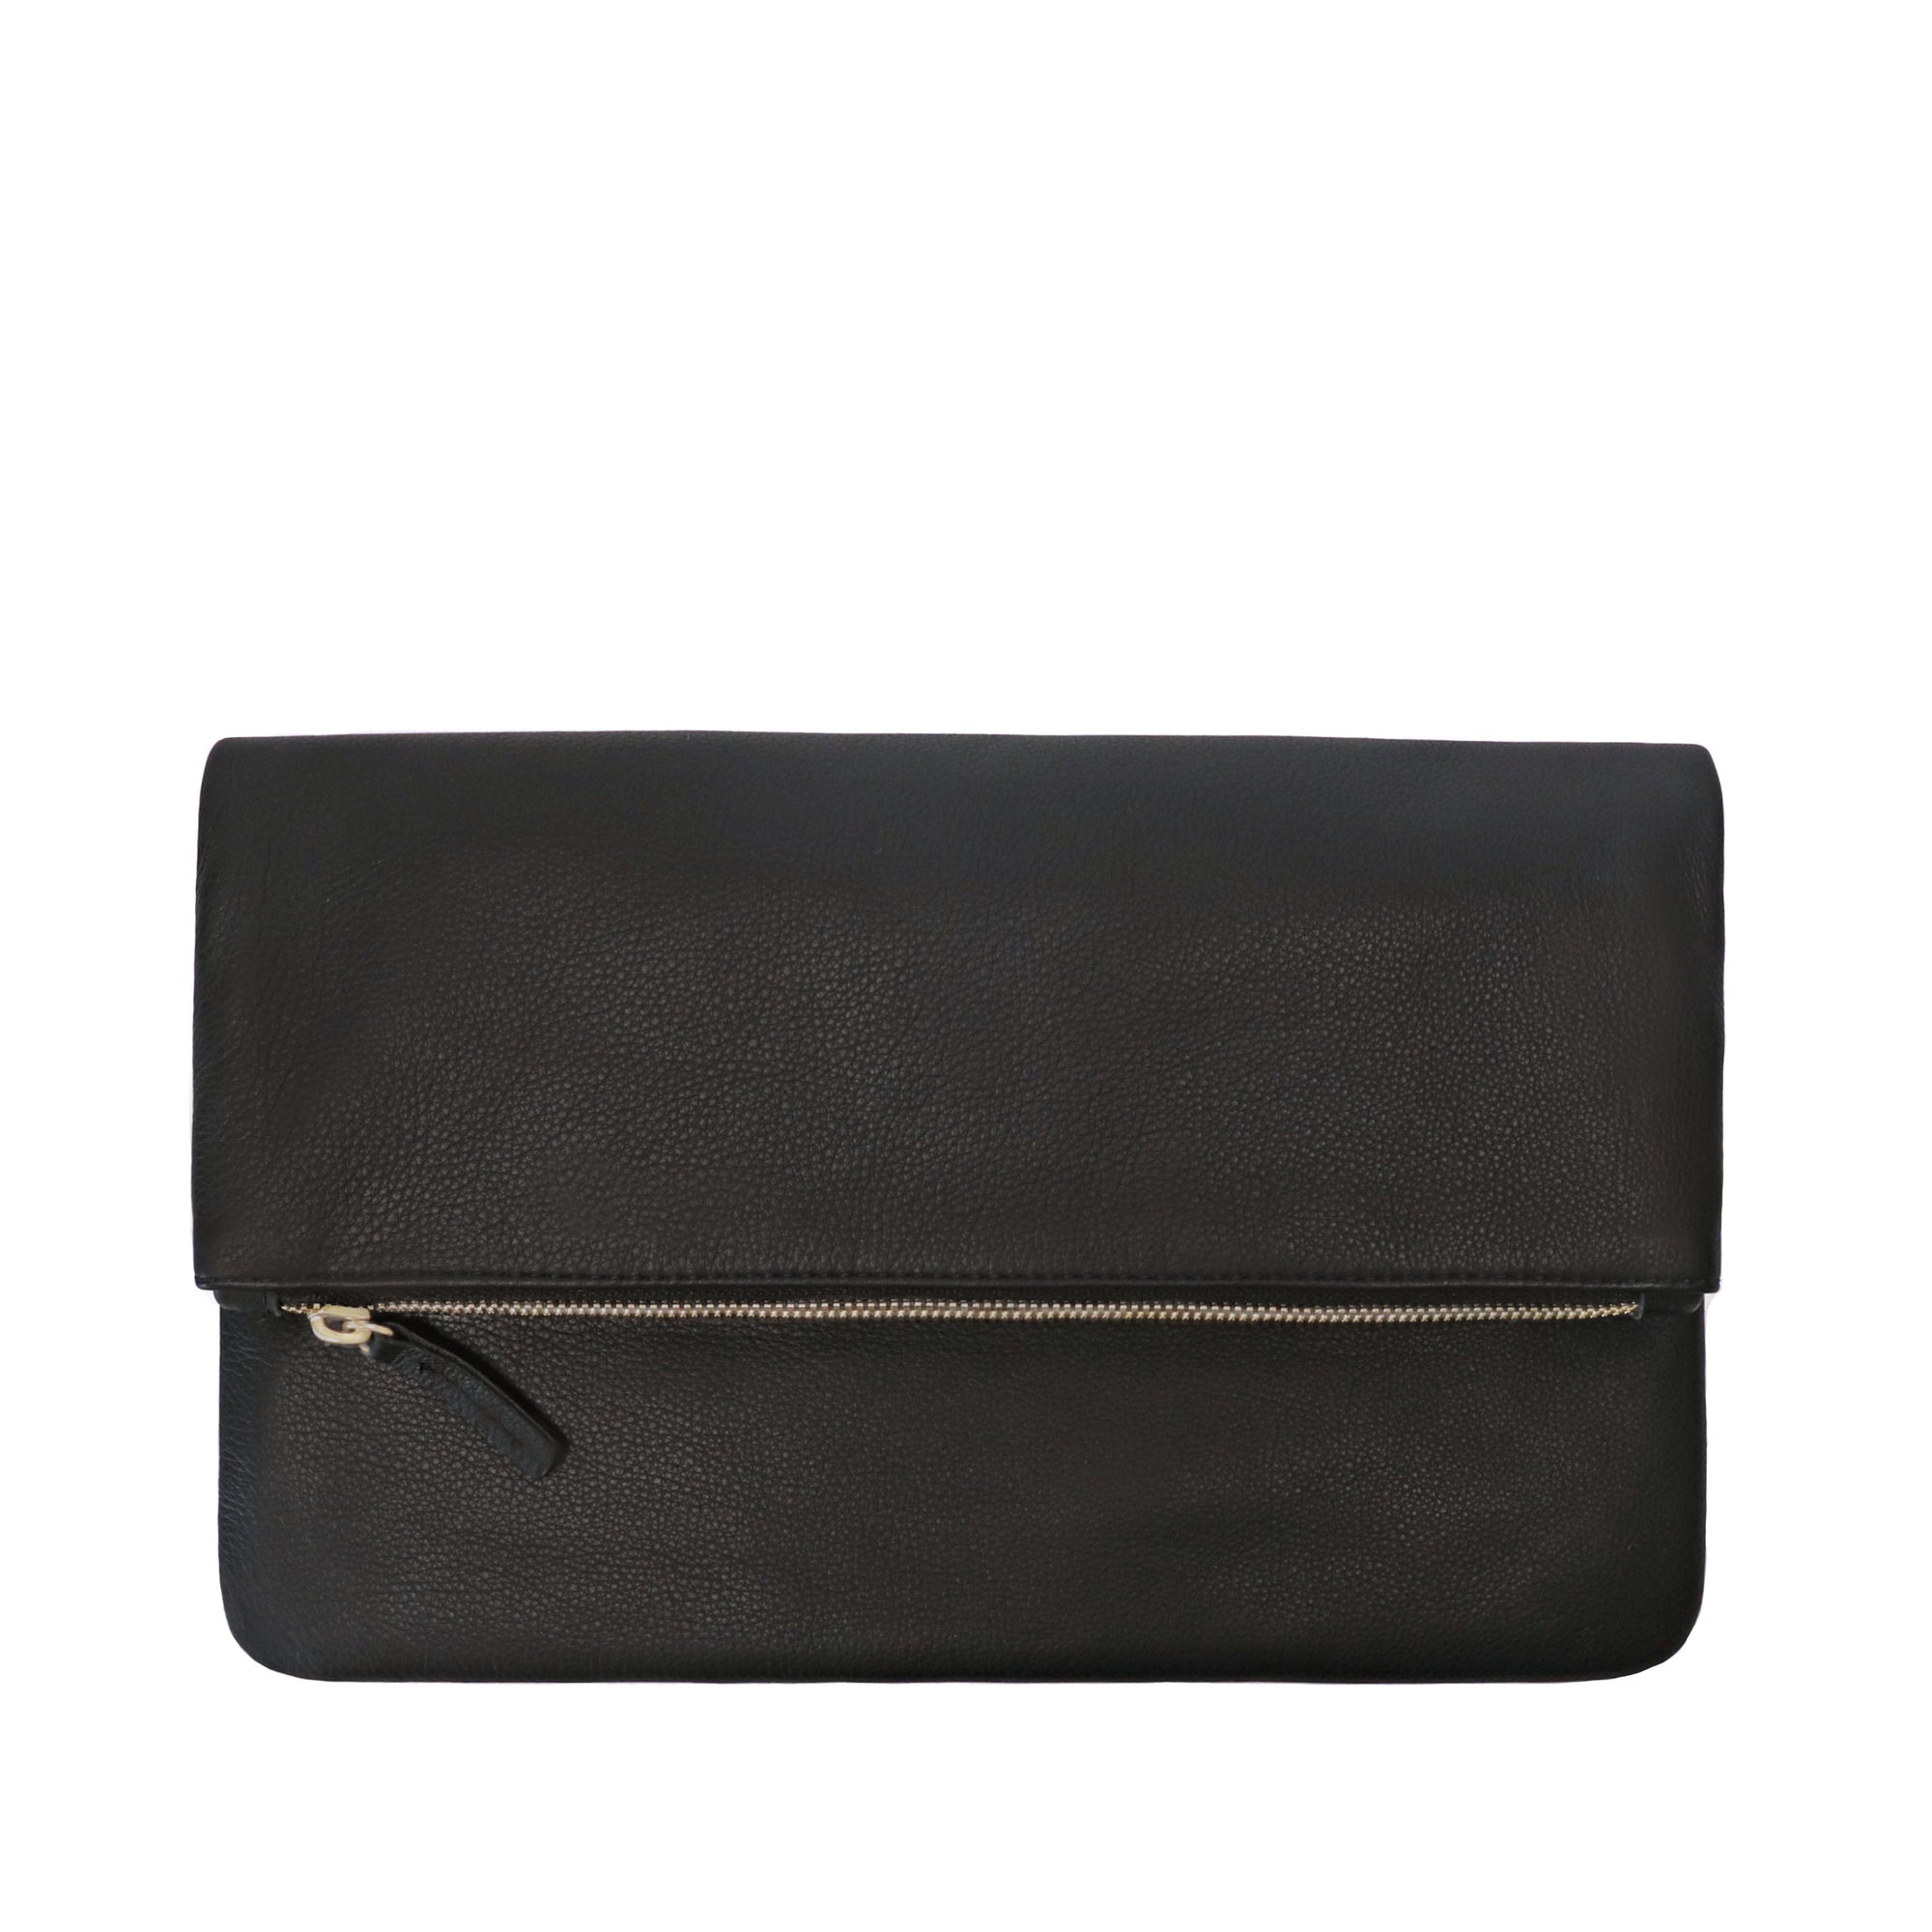 Malaga Clutch - Leather fold over zipper clutch in Acorn leather. Made in U.S.A. by Jana Kay.